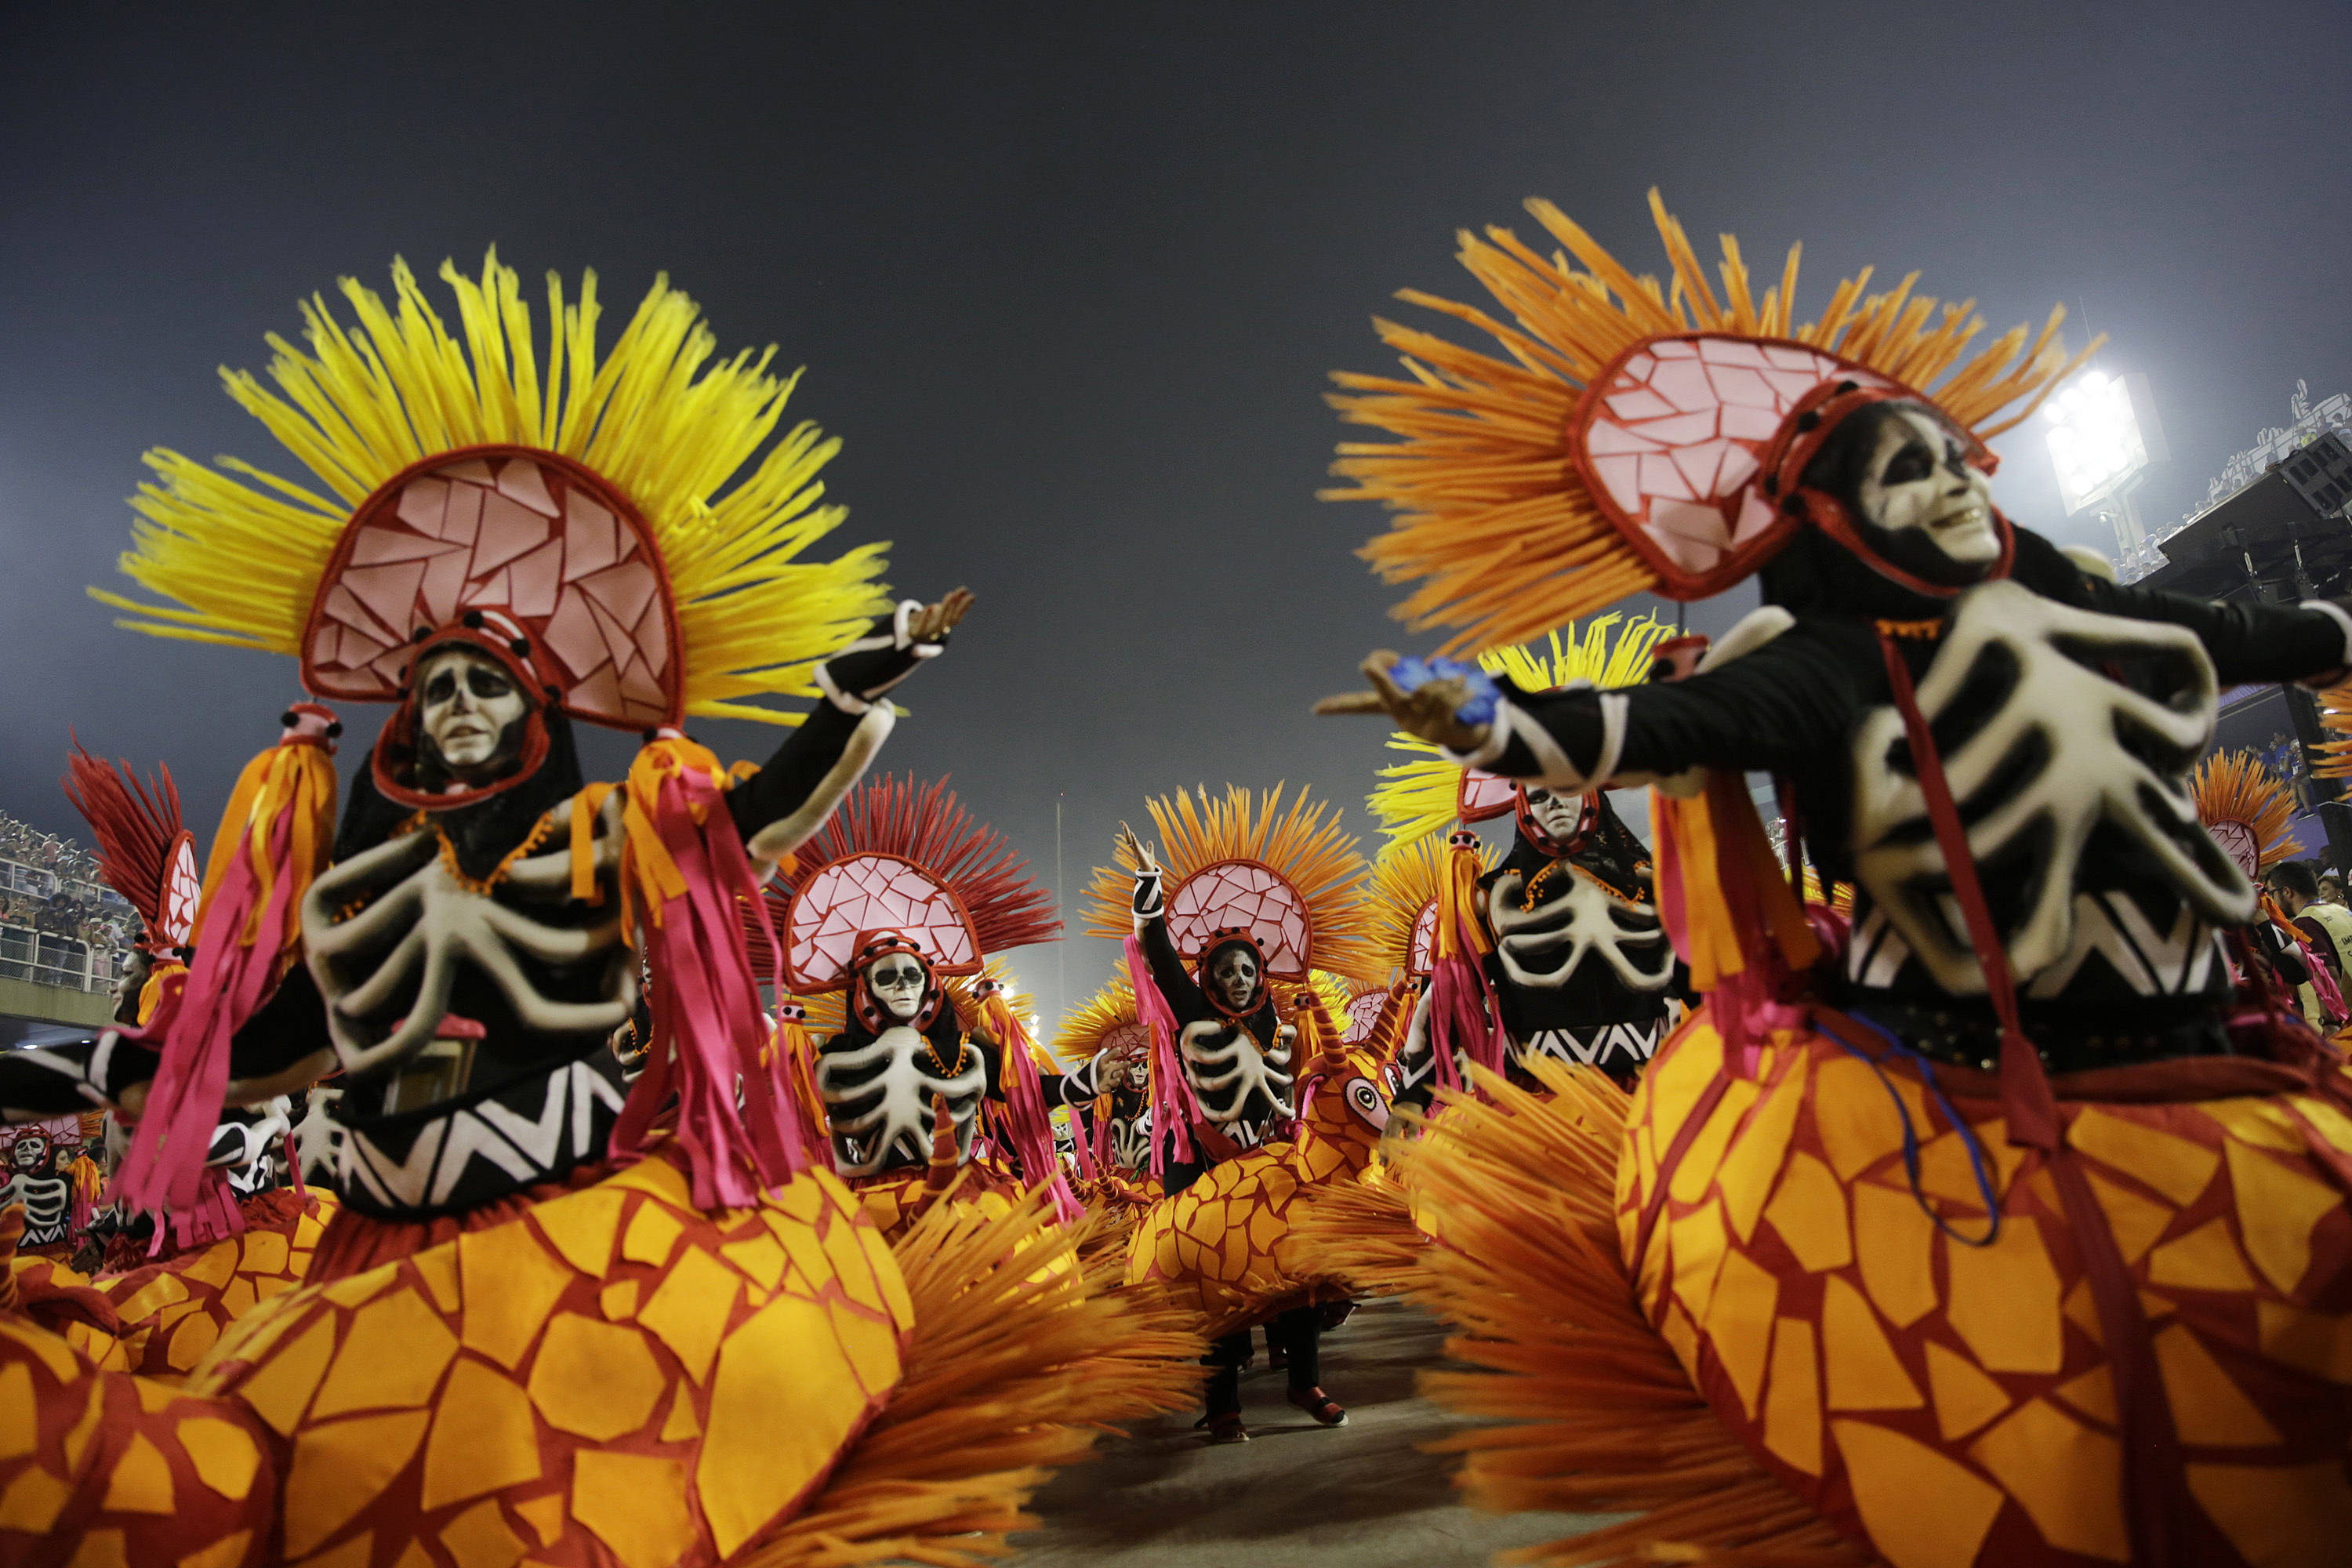 Performers from the Paraiso de Tuiuti samba school parade during Carnival celebrations at the Sambadrome in Rio de Janeiro, Brazil, Tuesday, March 5, 2019. (AP Photo/Silvia Izquierdo)